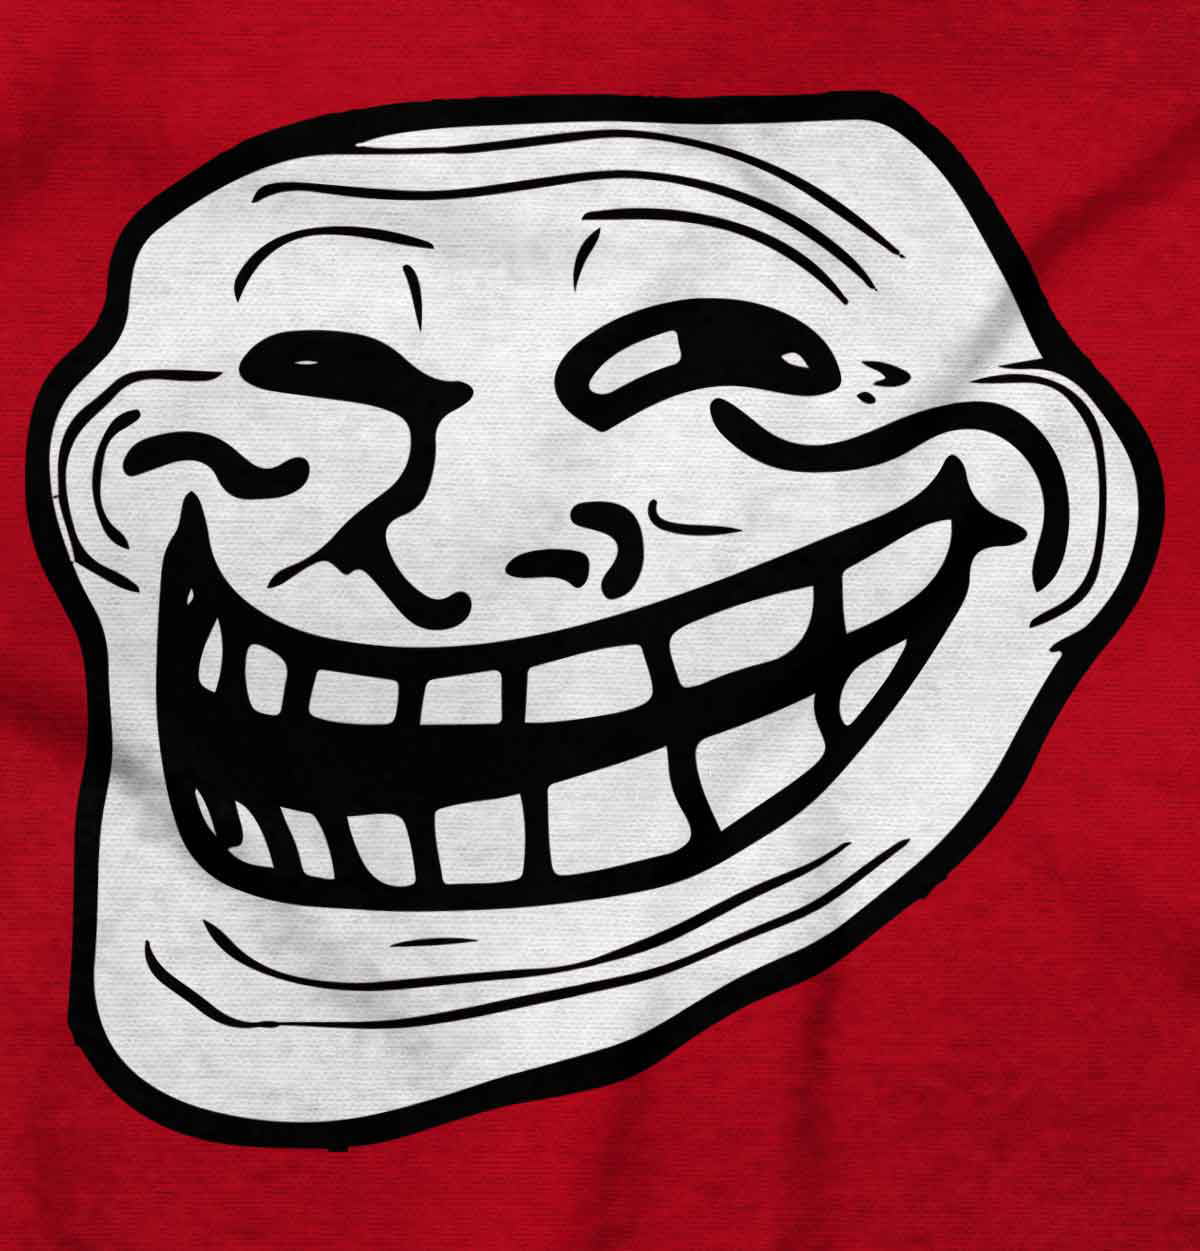  Epic Troll Face T-Shirt